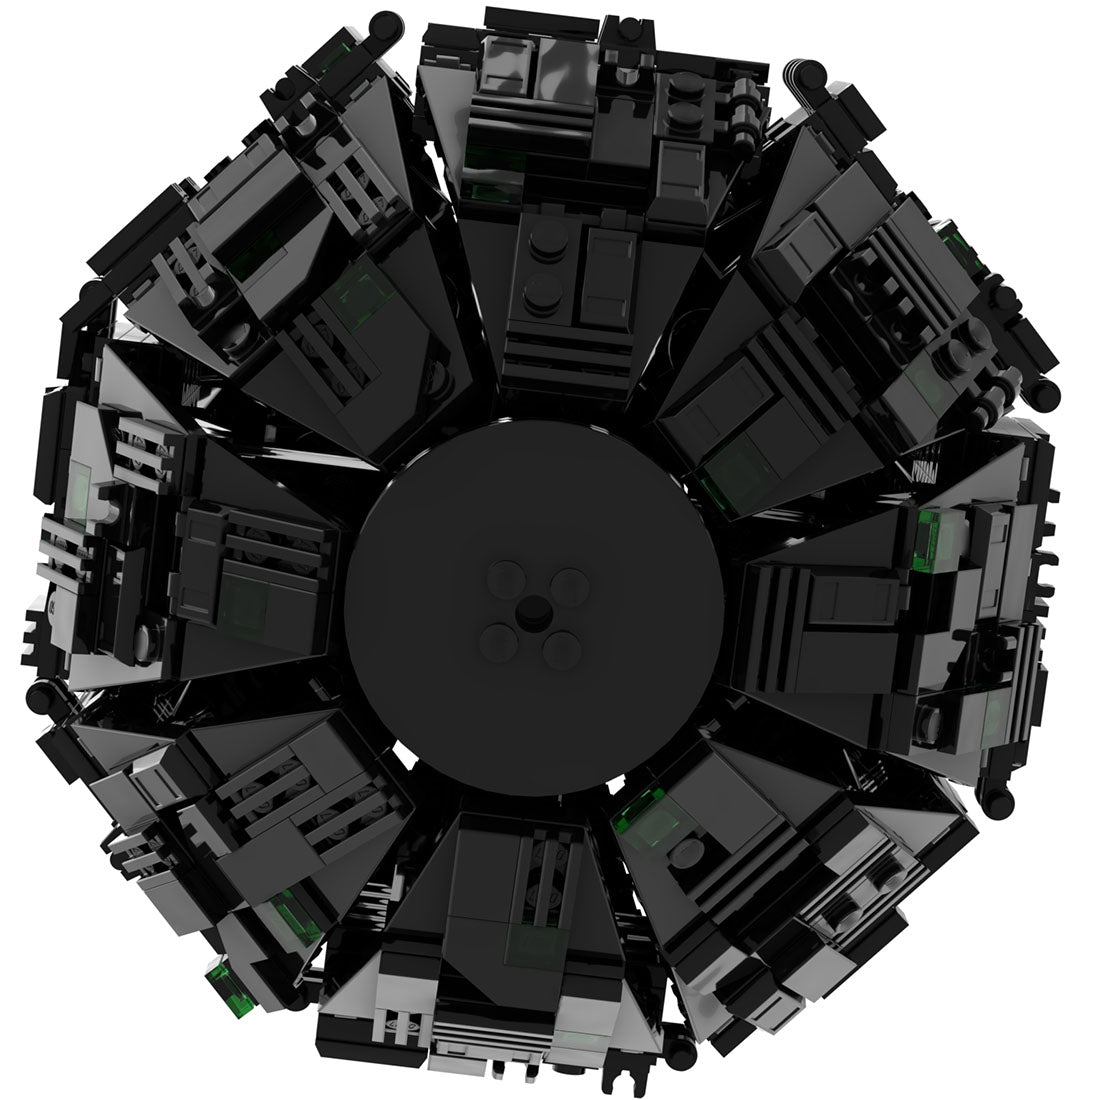 MOC-113837 Borg Sphere Warship Building Blocks